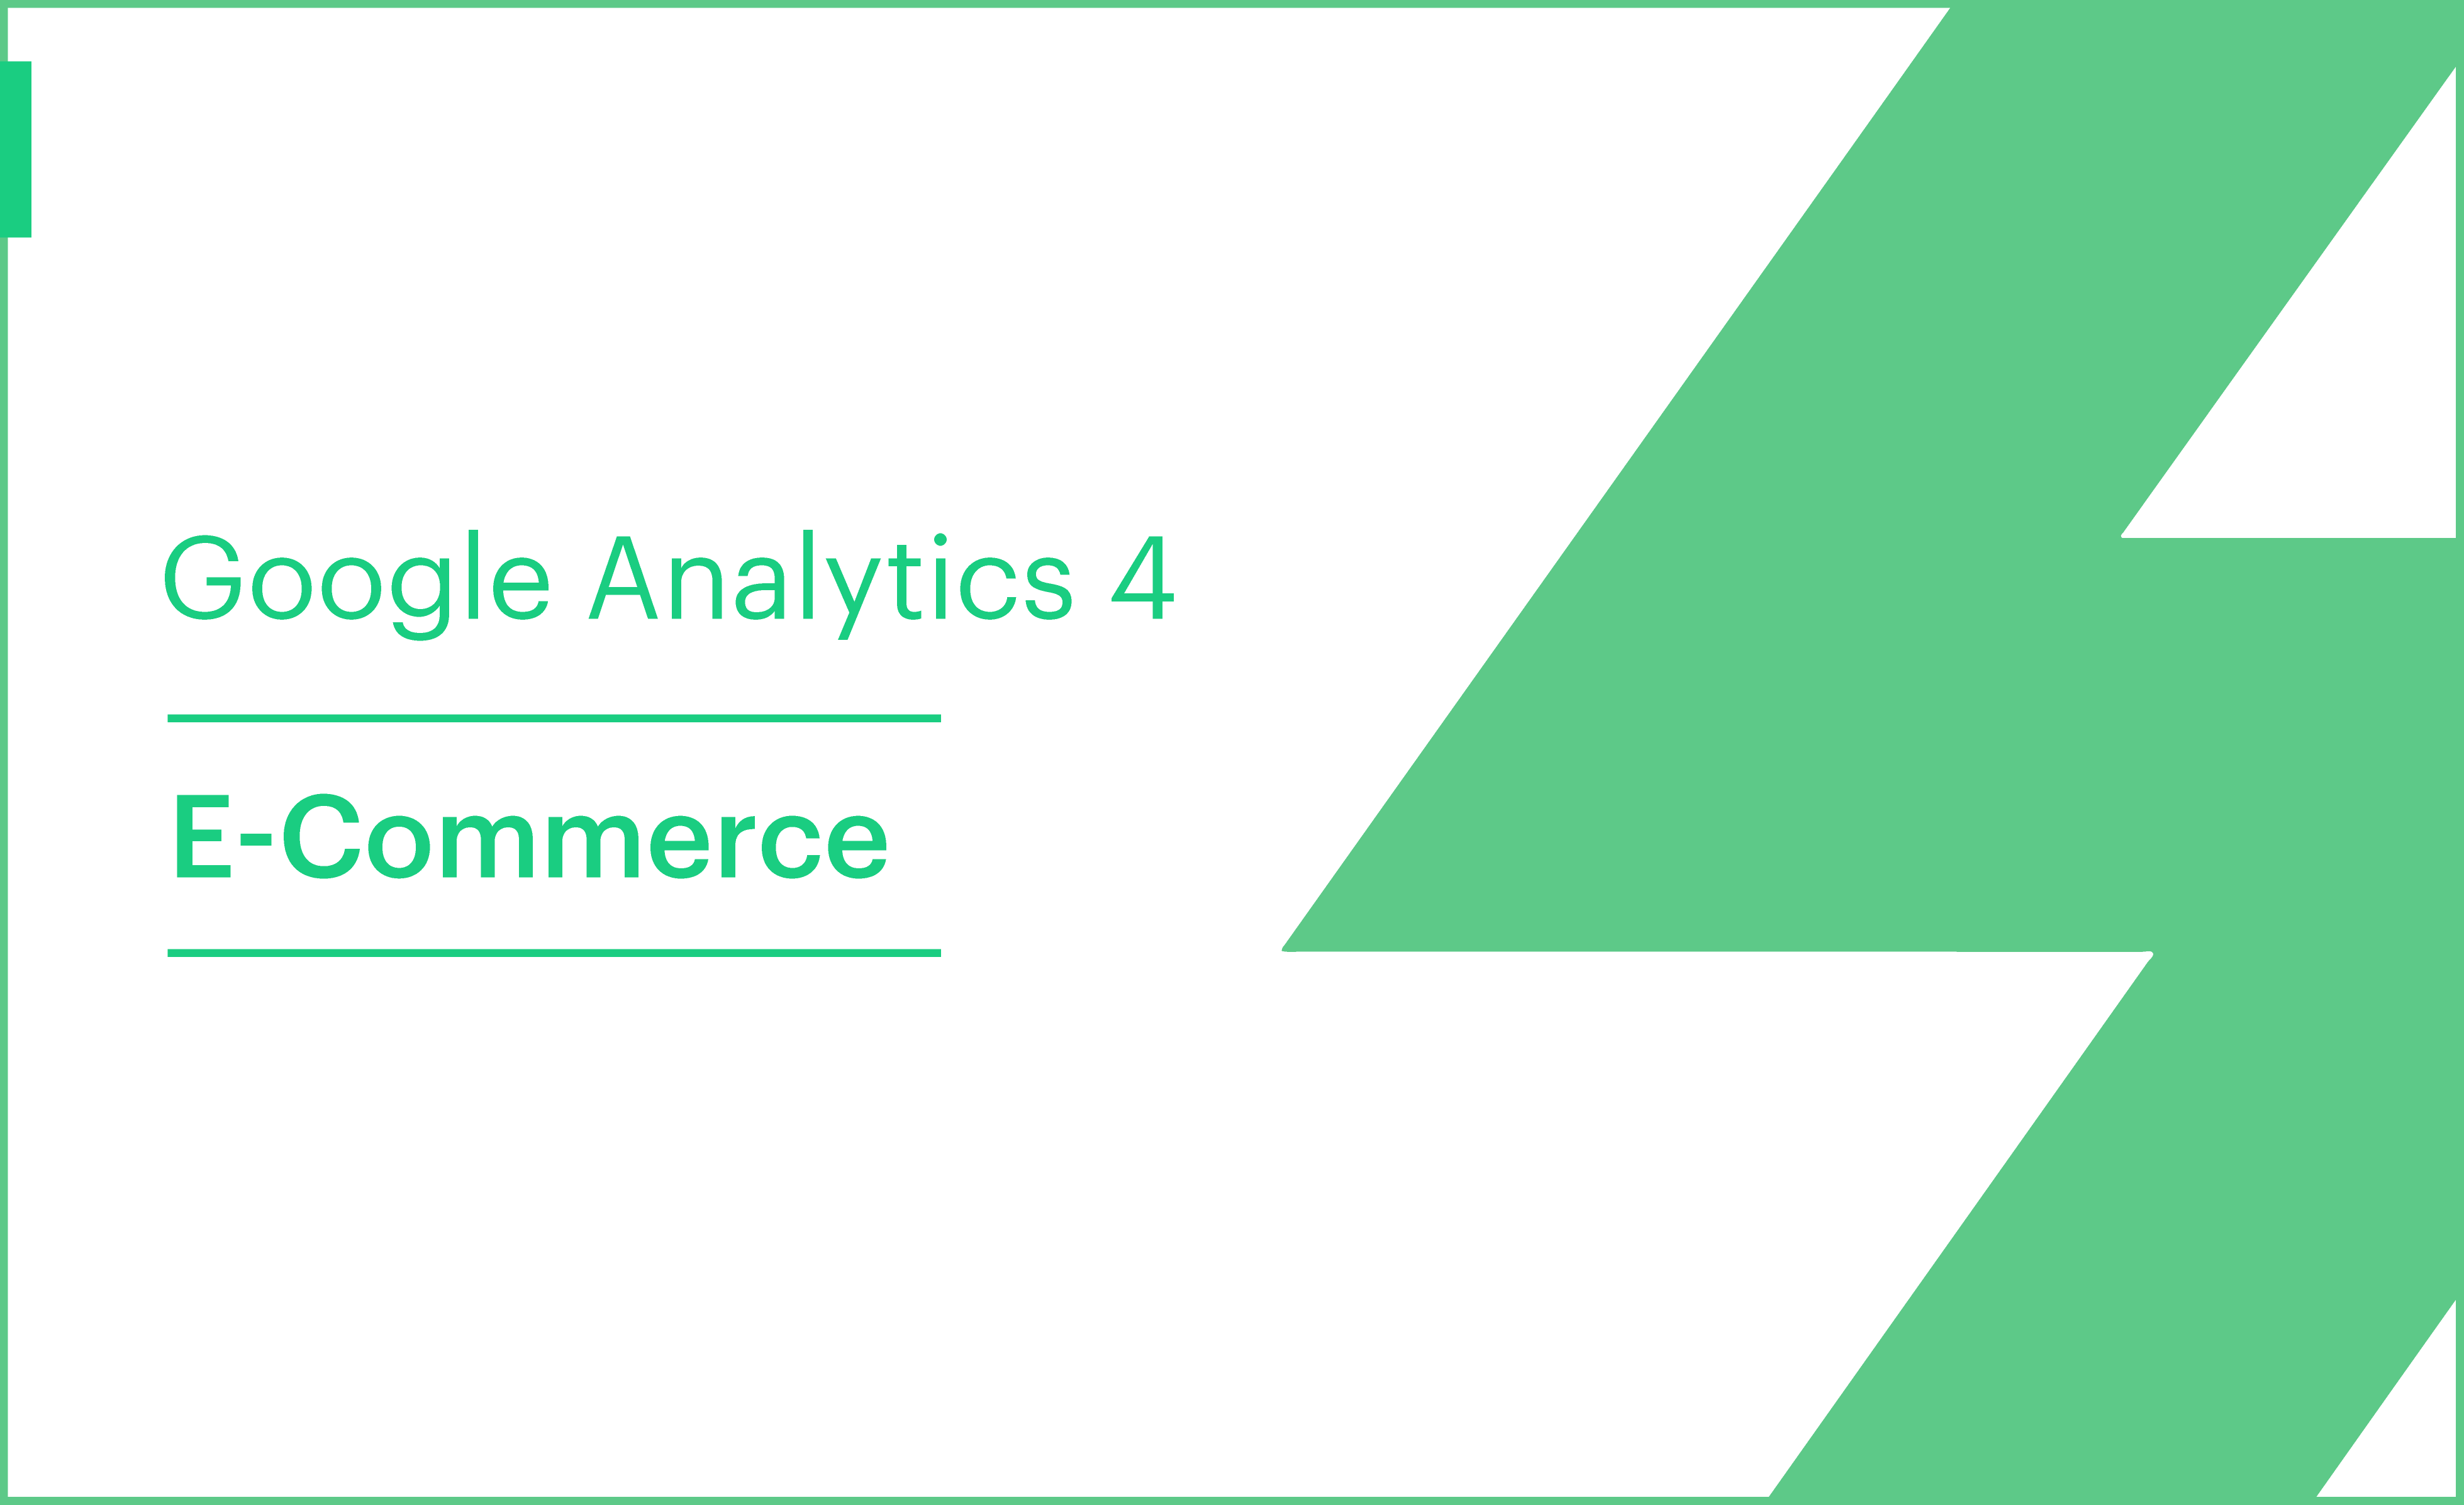 Google Analytics 4 E-commerce Report Template